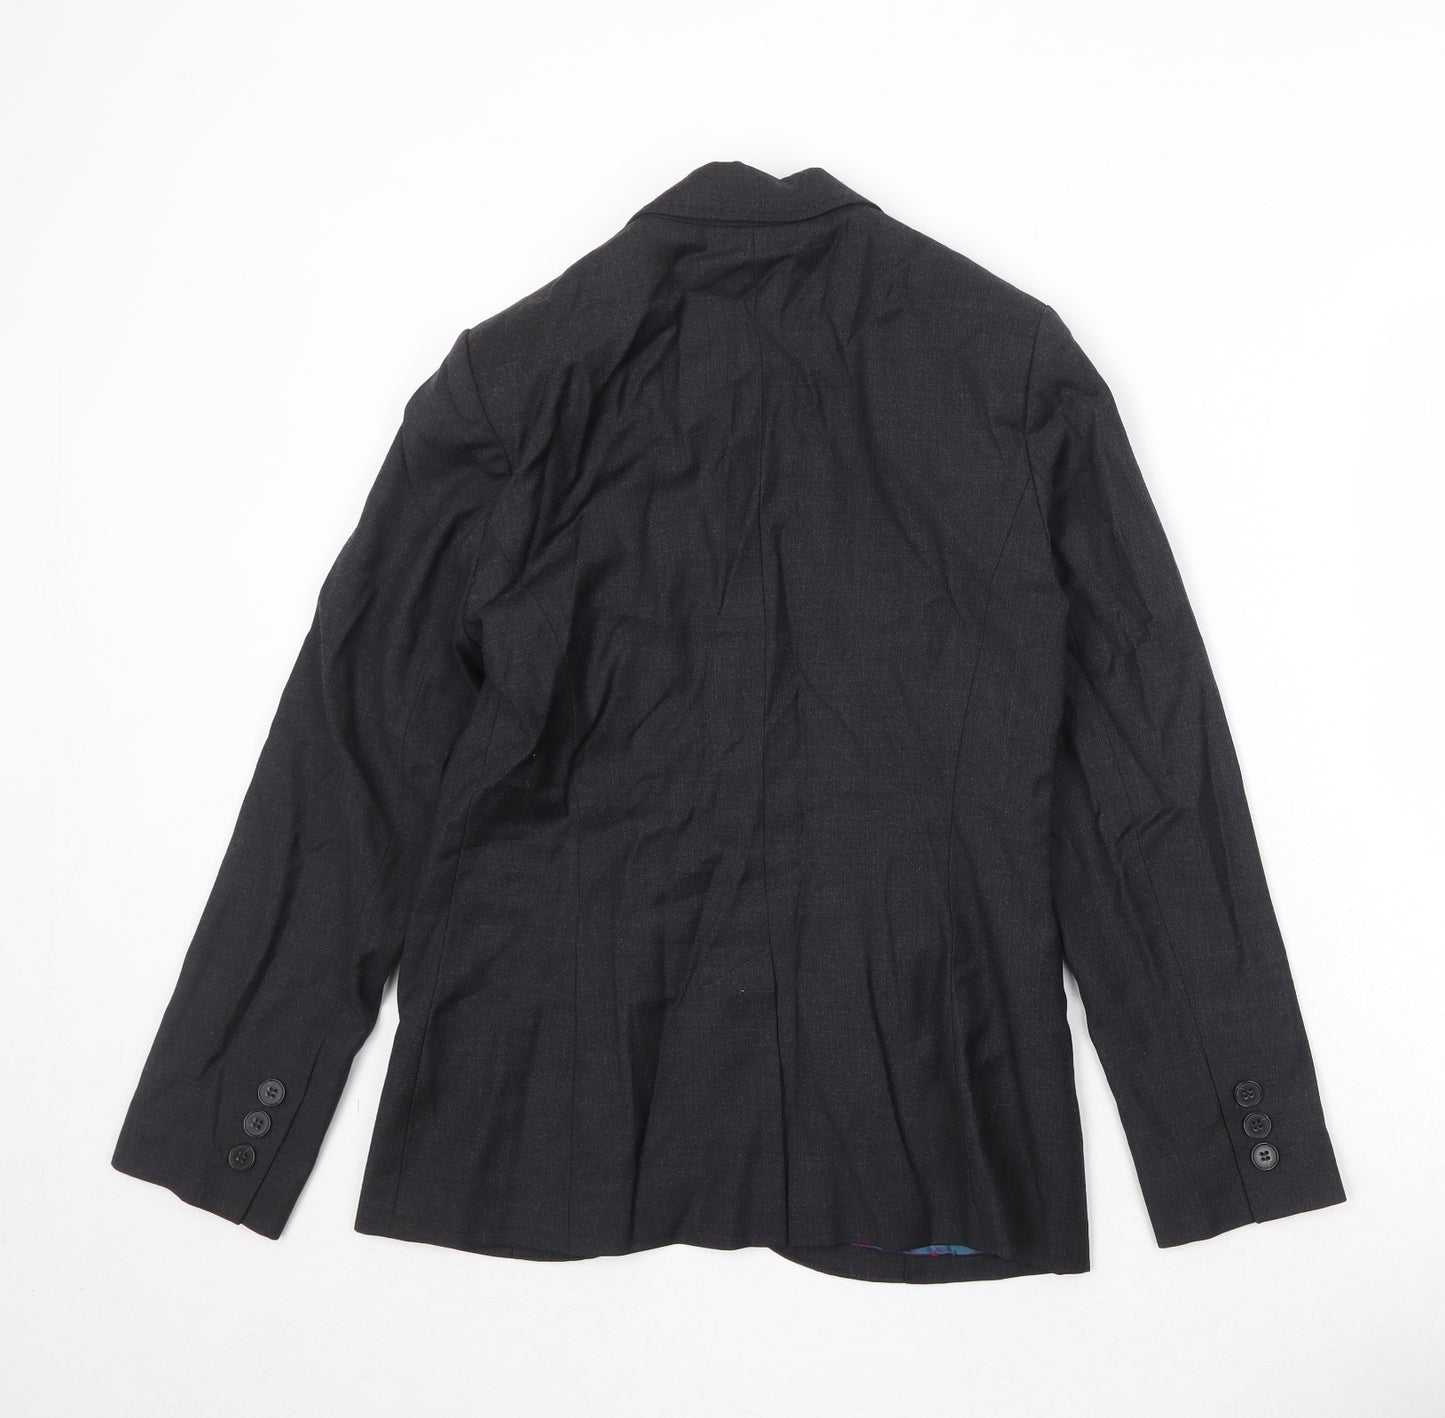 Marks and Spencer Womens Black Herringbone Wool Jacket Blazer Size 10